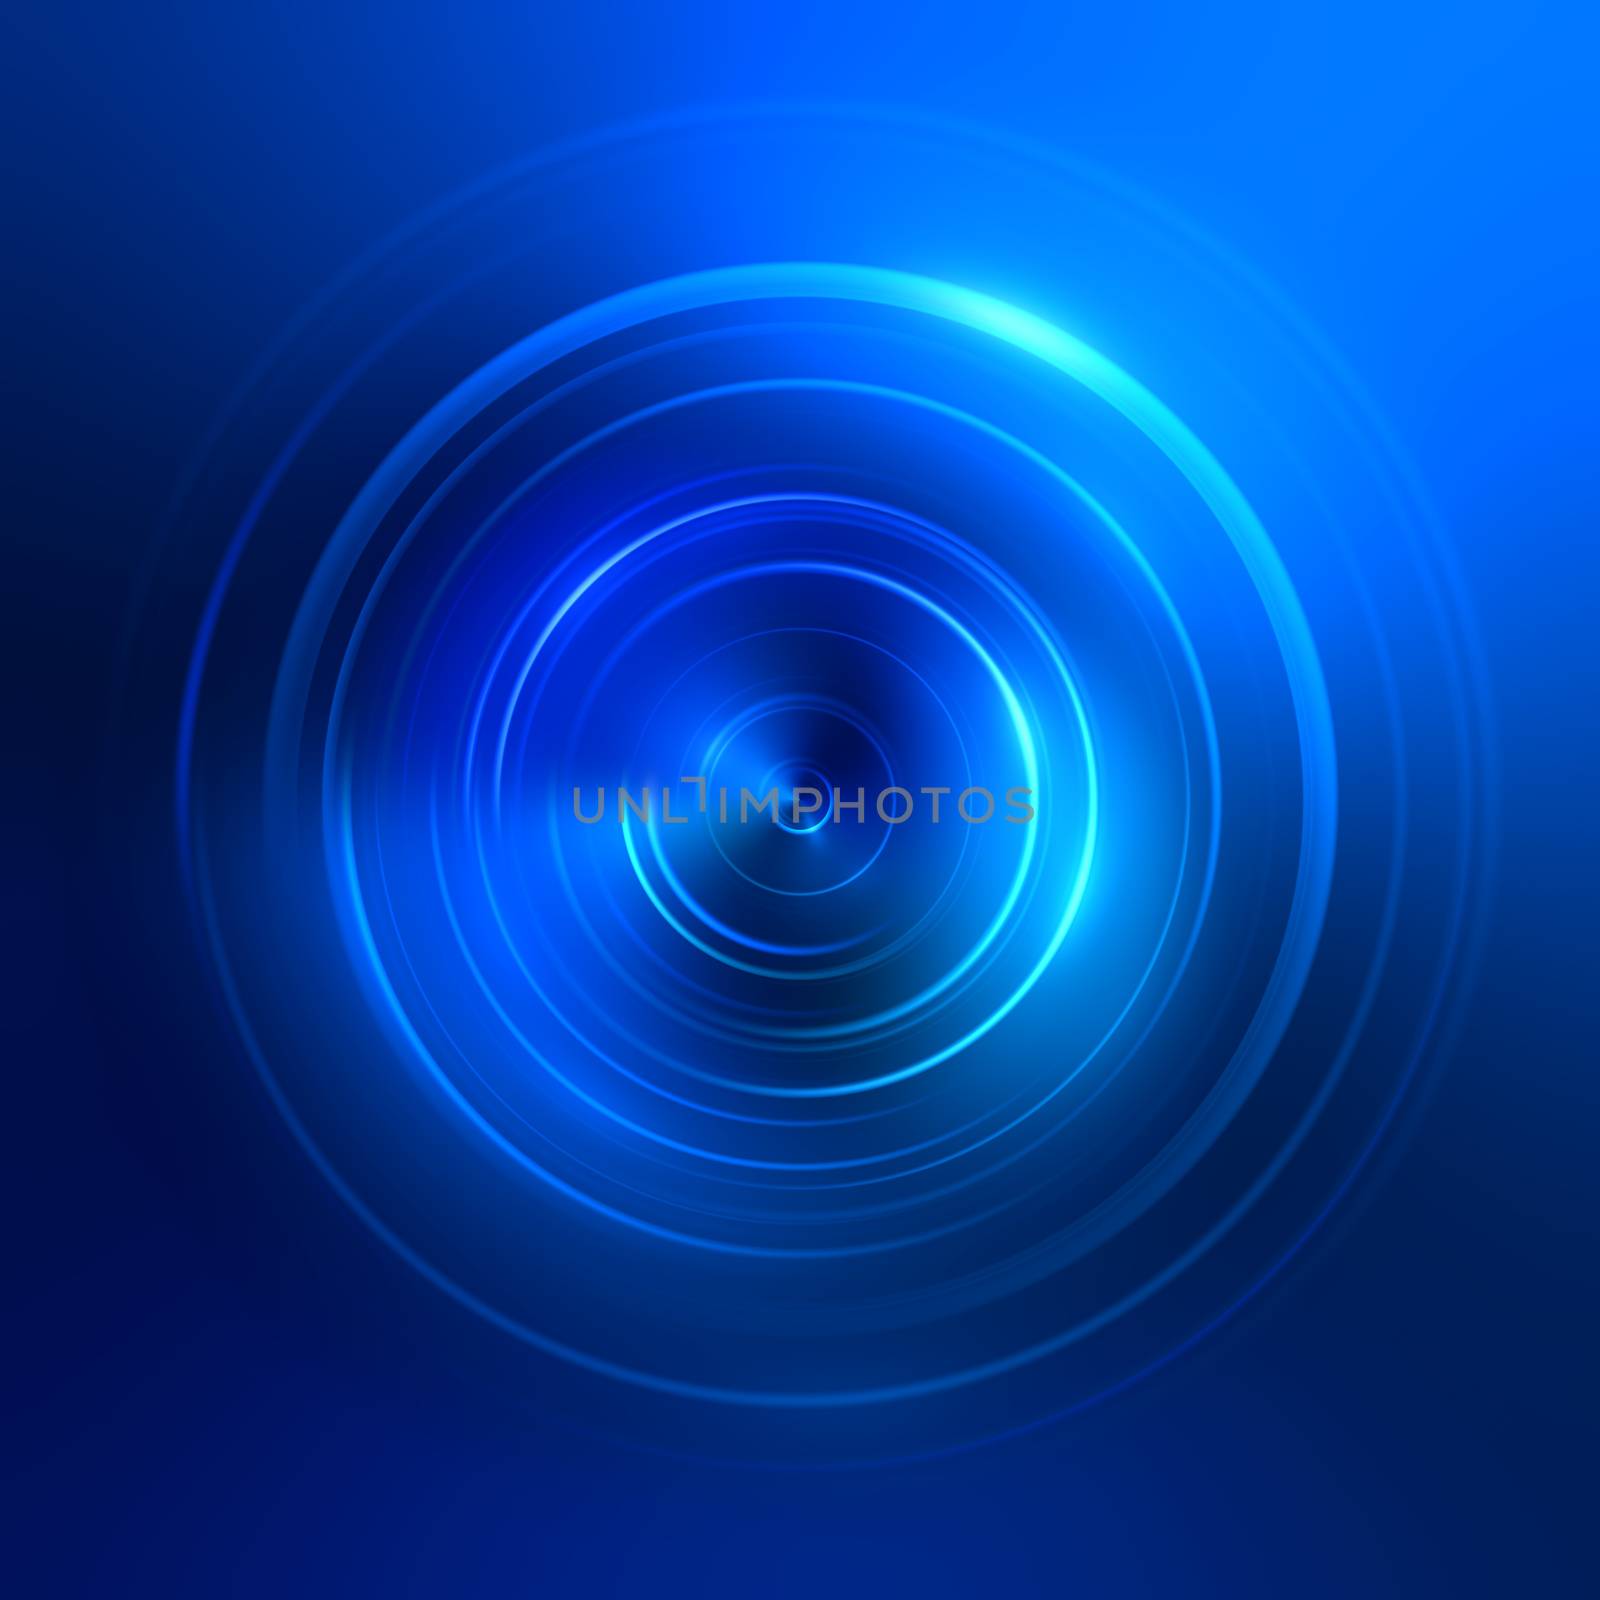 2d illustration of a blue light circles background